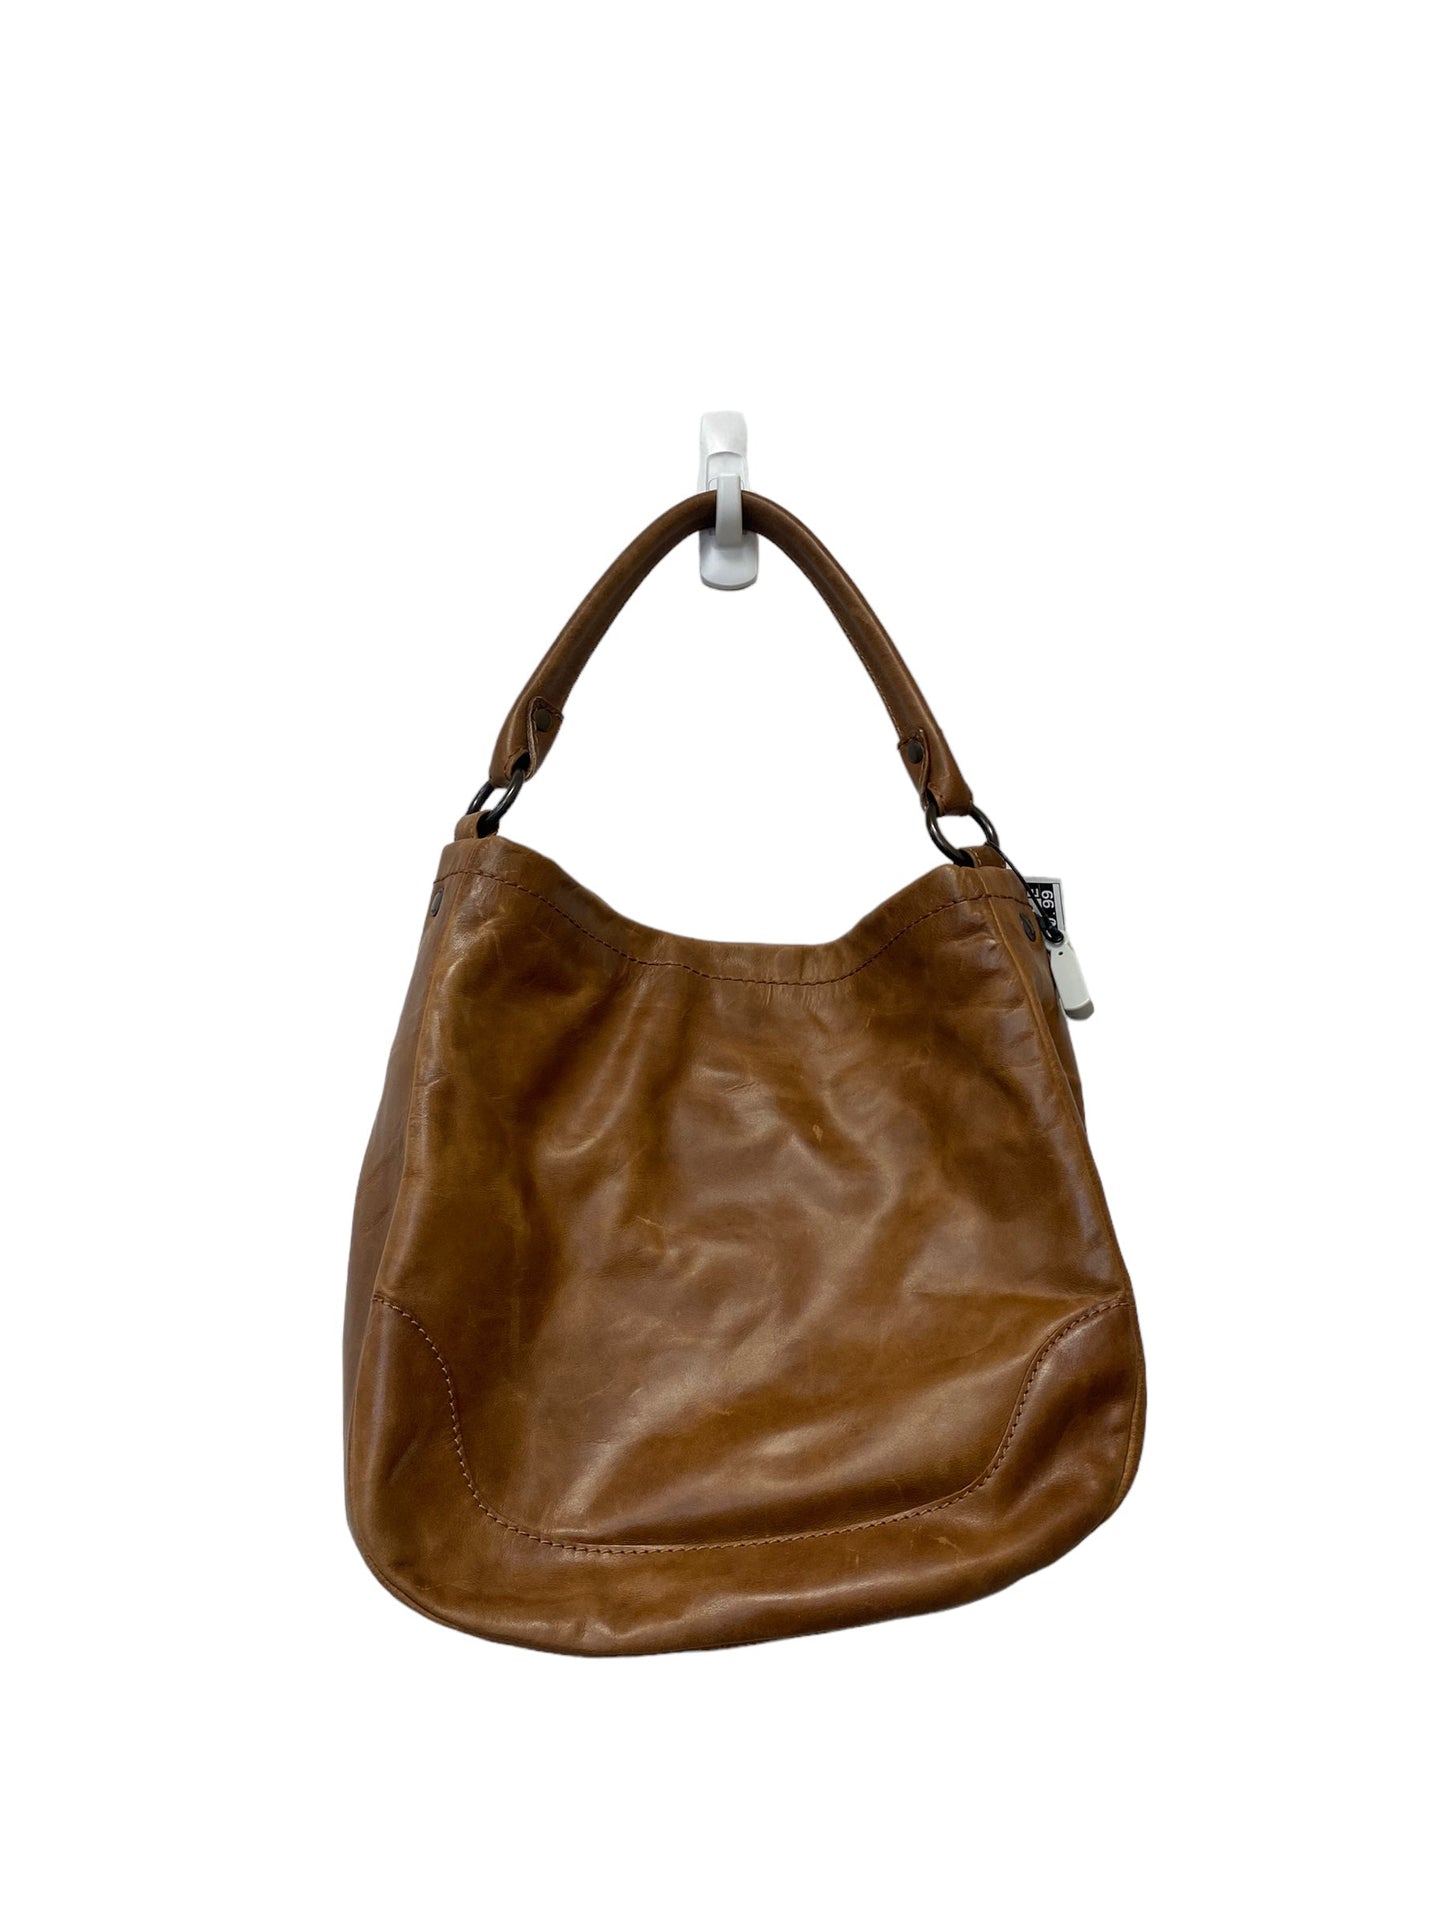 Handbag By Frye  Size: Medium